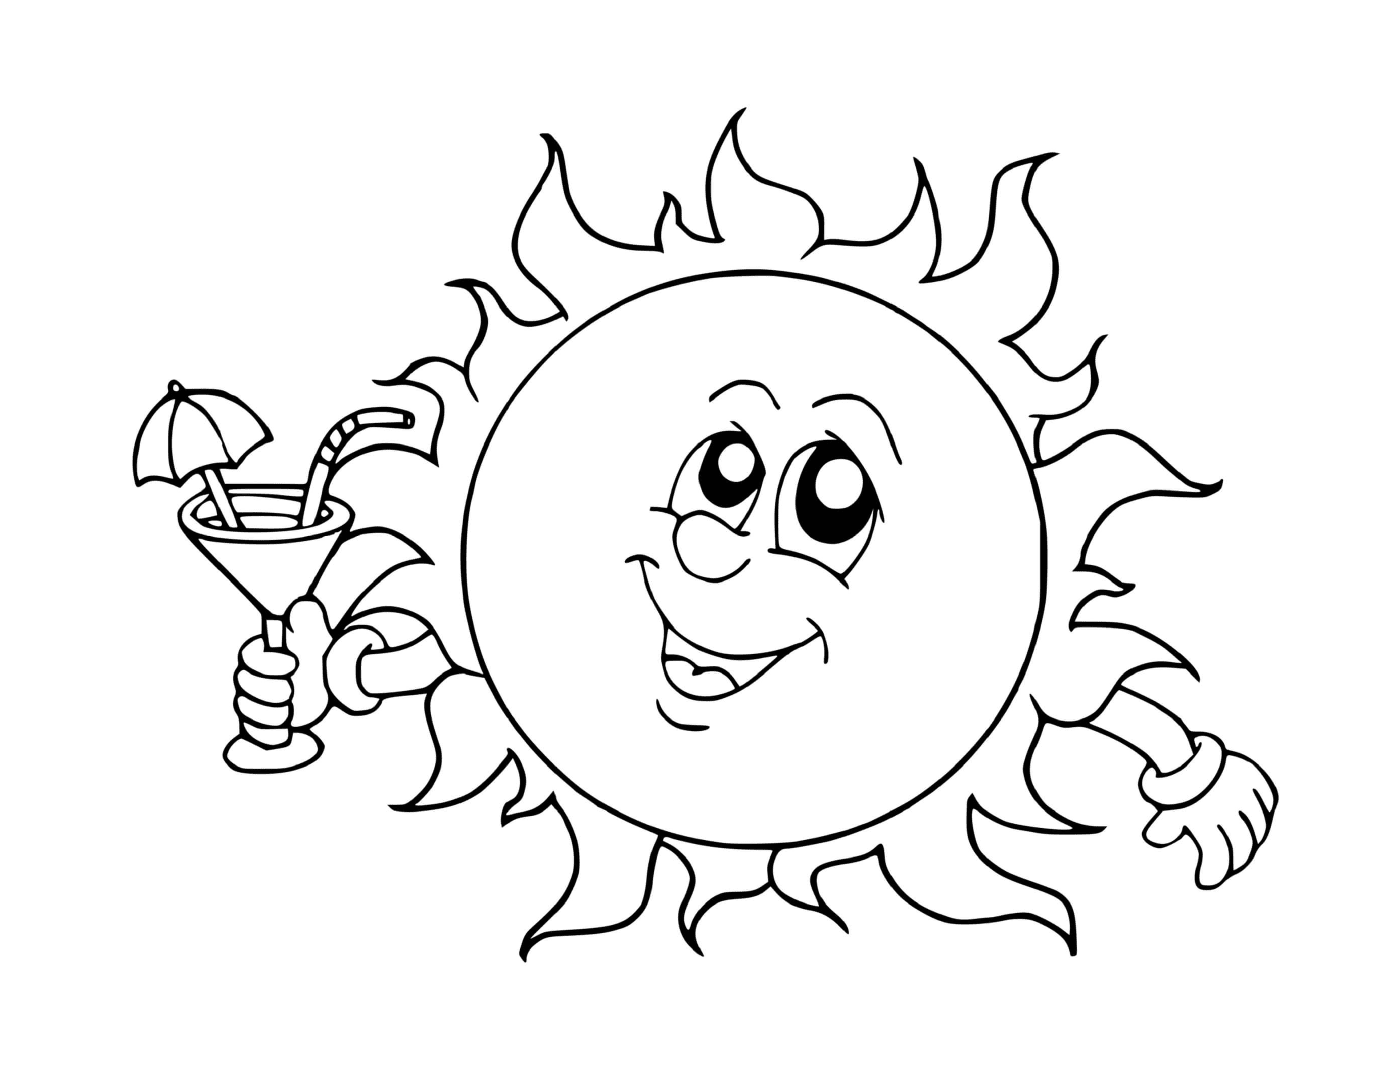  Sun holding refreshing drink 